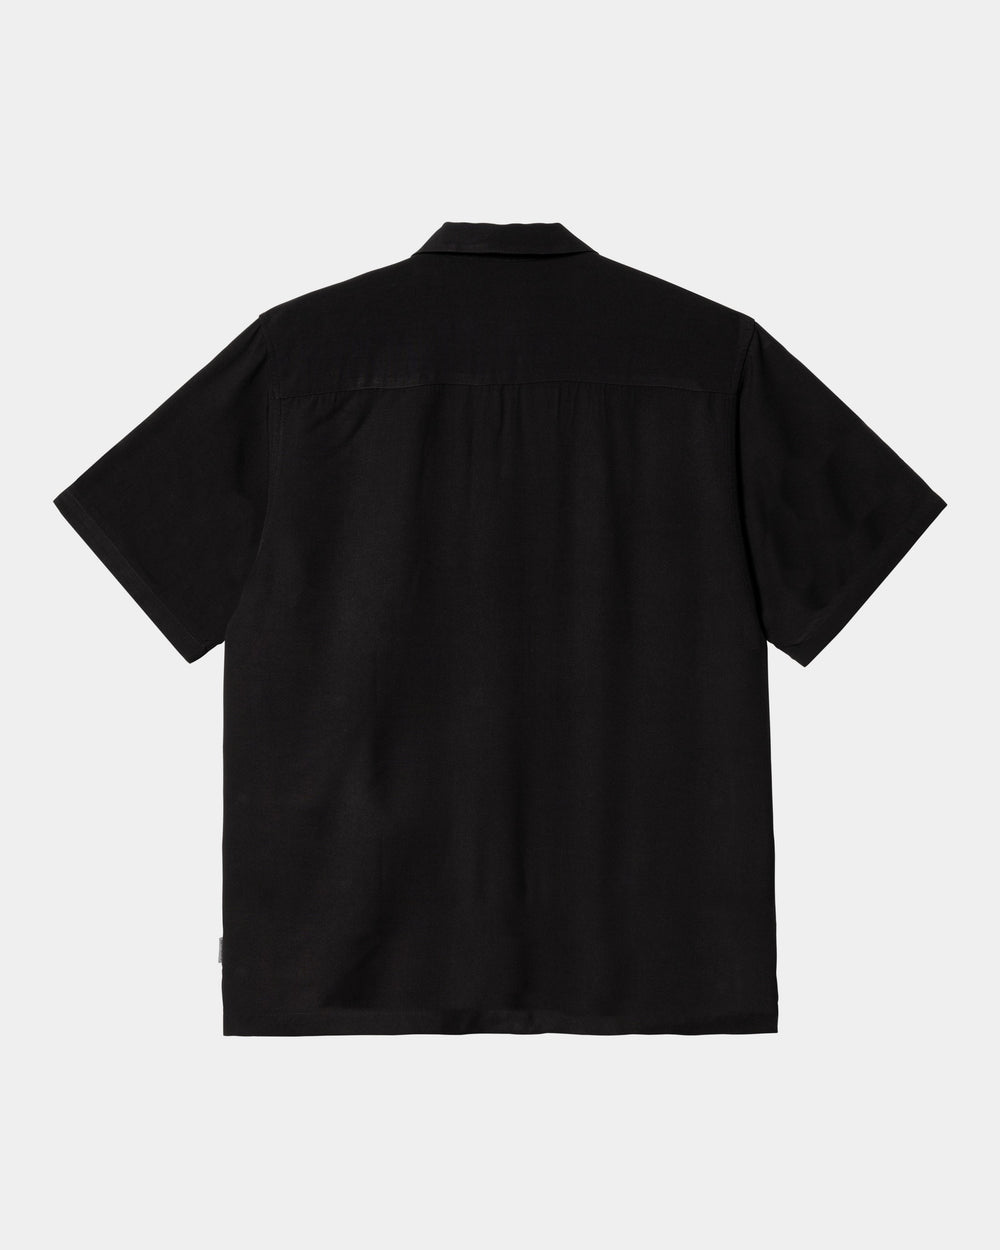 S/s Coba Shirt Sustainable Viscose Poplin, 4.4 Oz (Black)